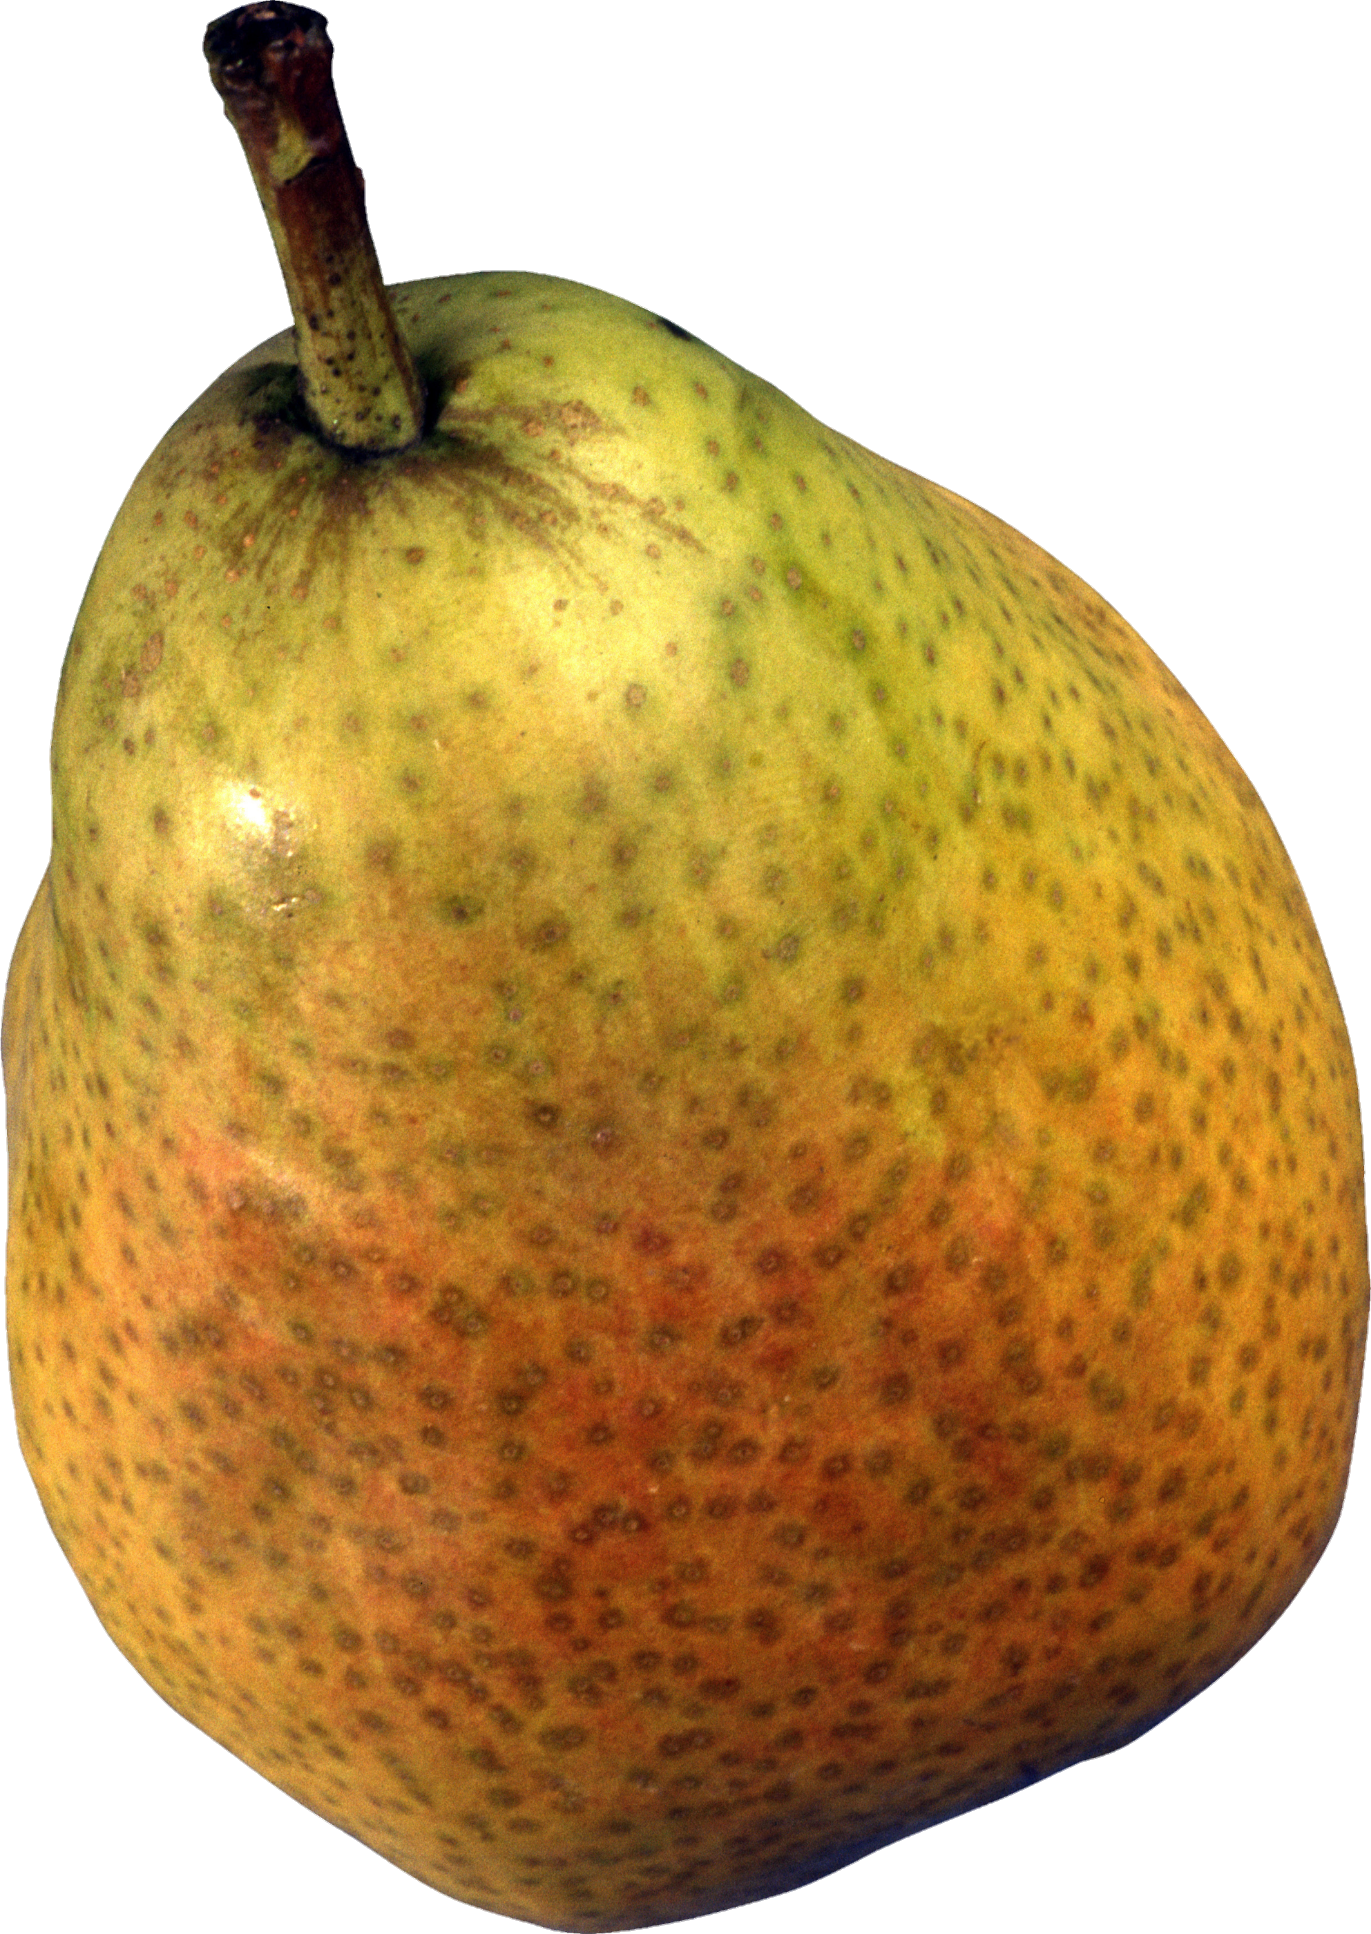 pear-5